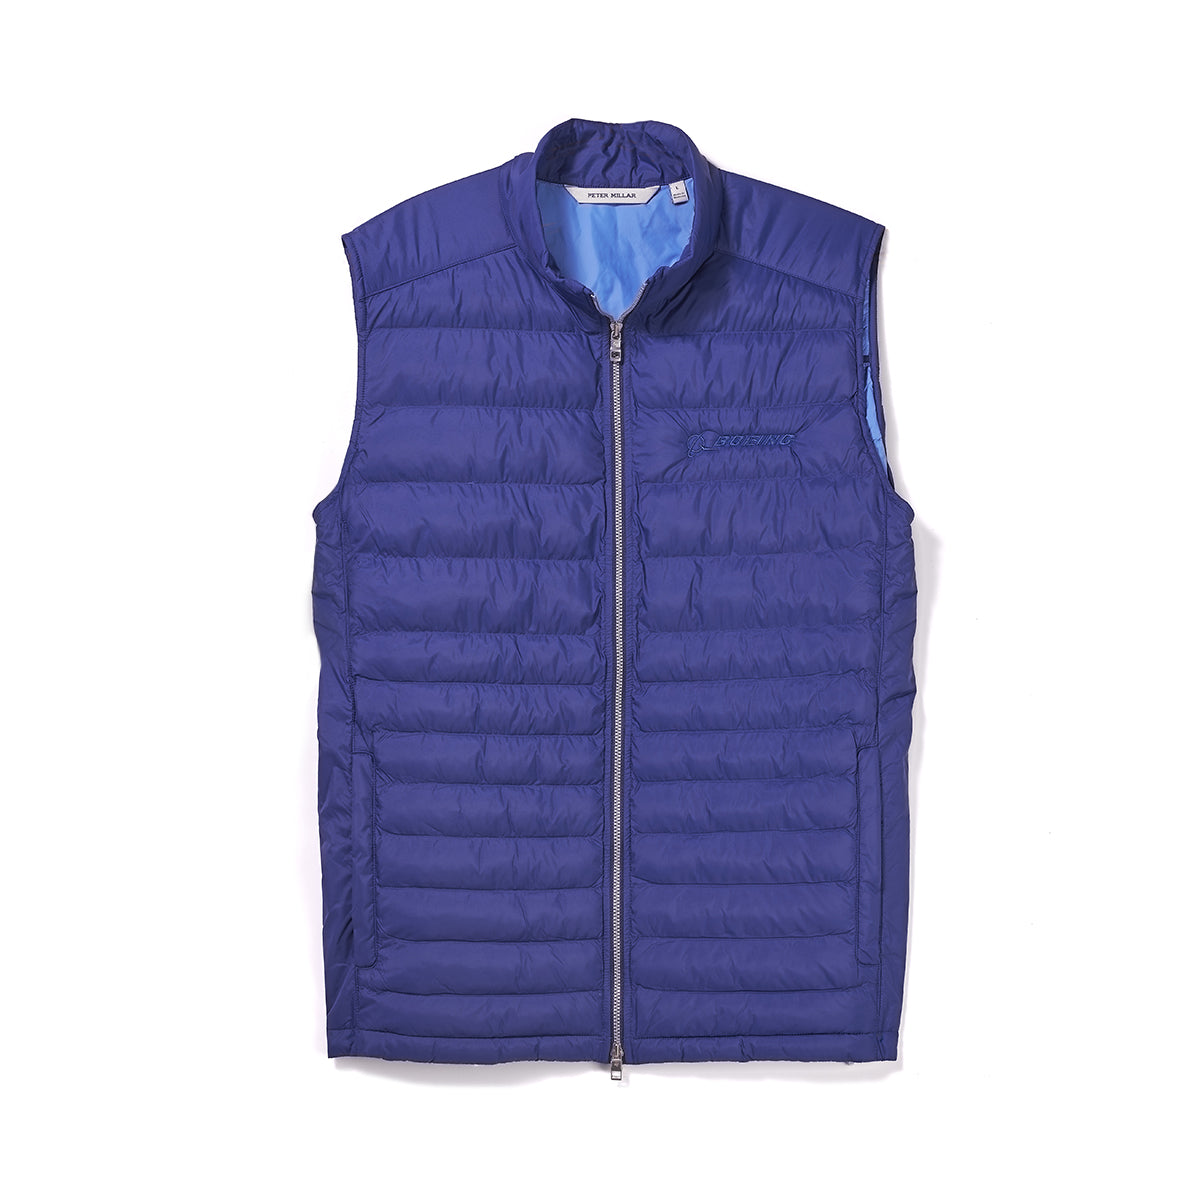 Peter Millar Boeing Men's Crown Elite Light Vest – The Boeing Store